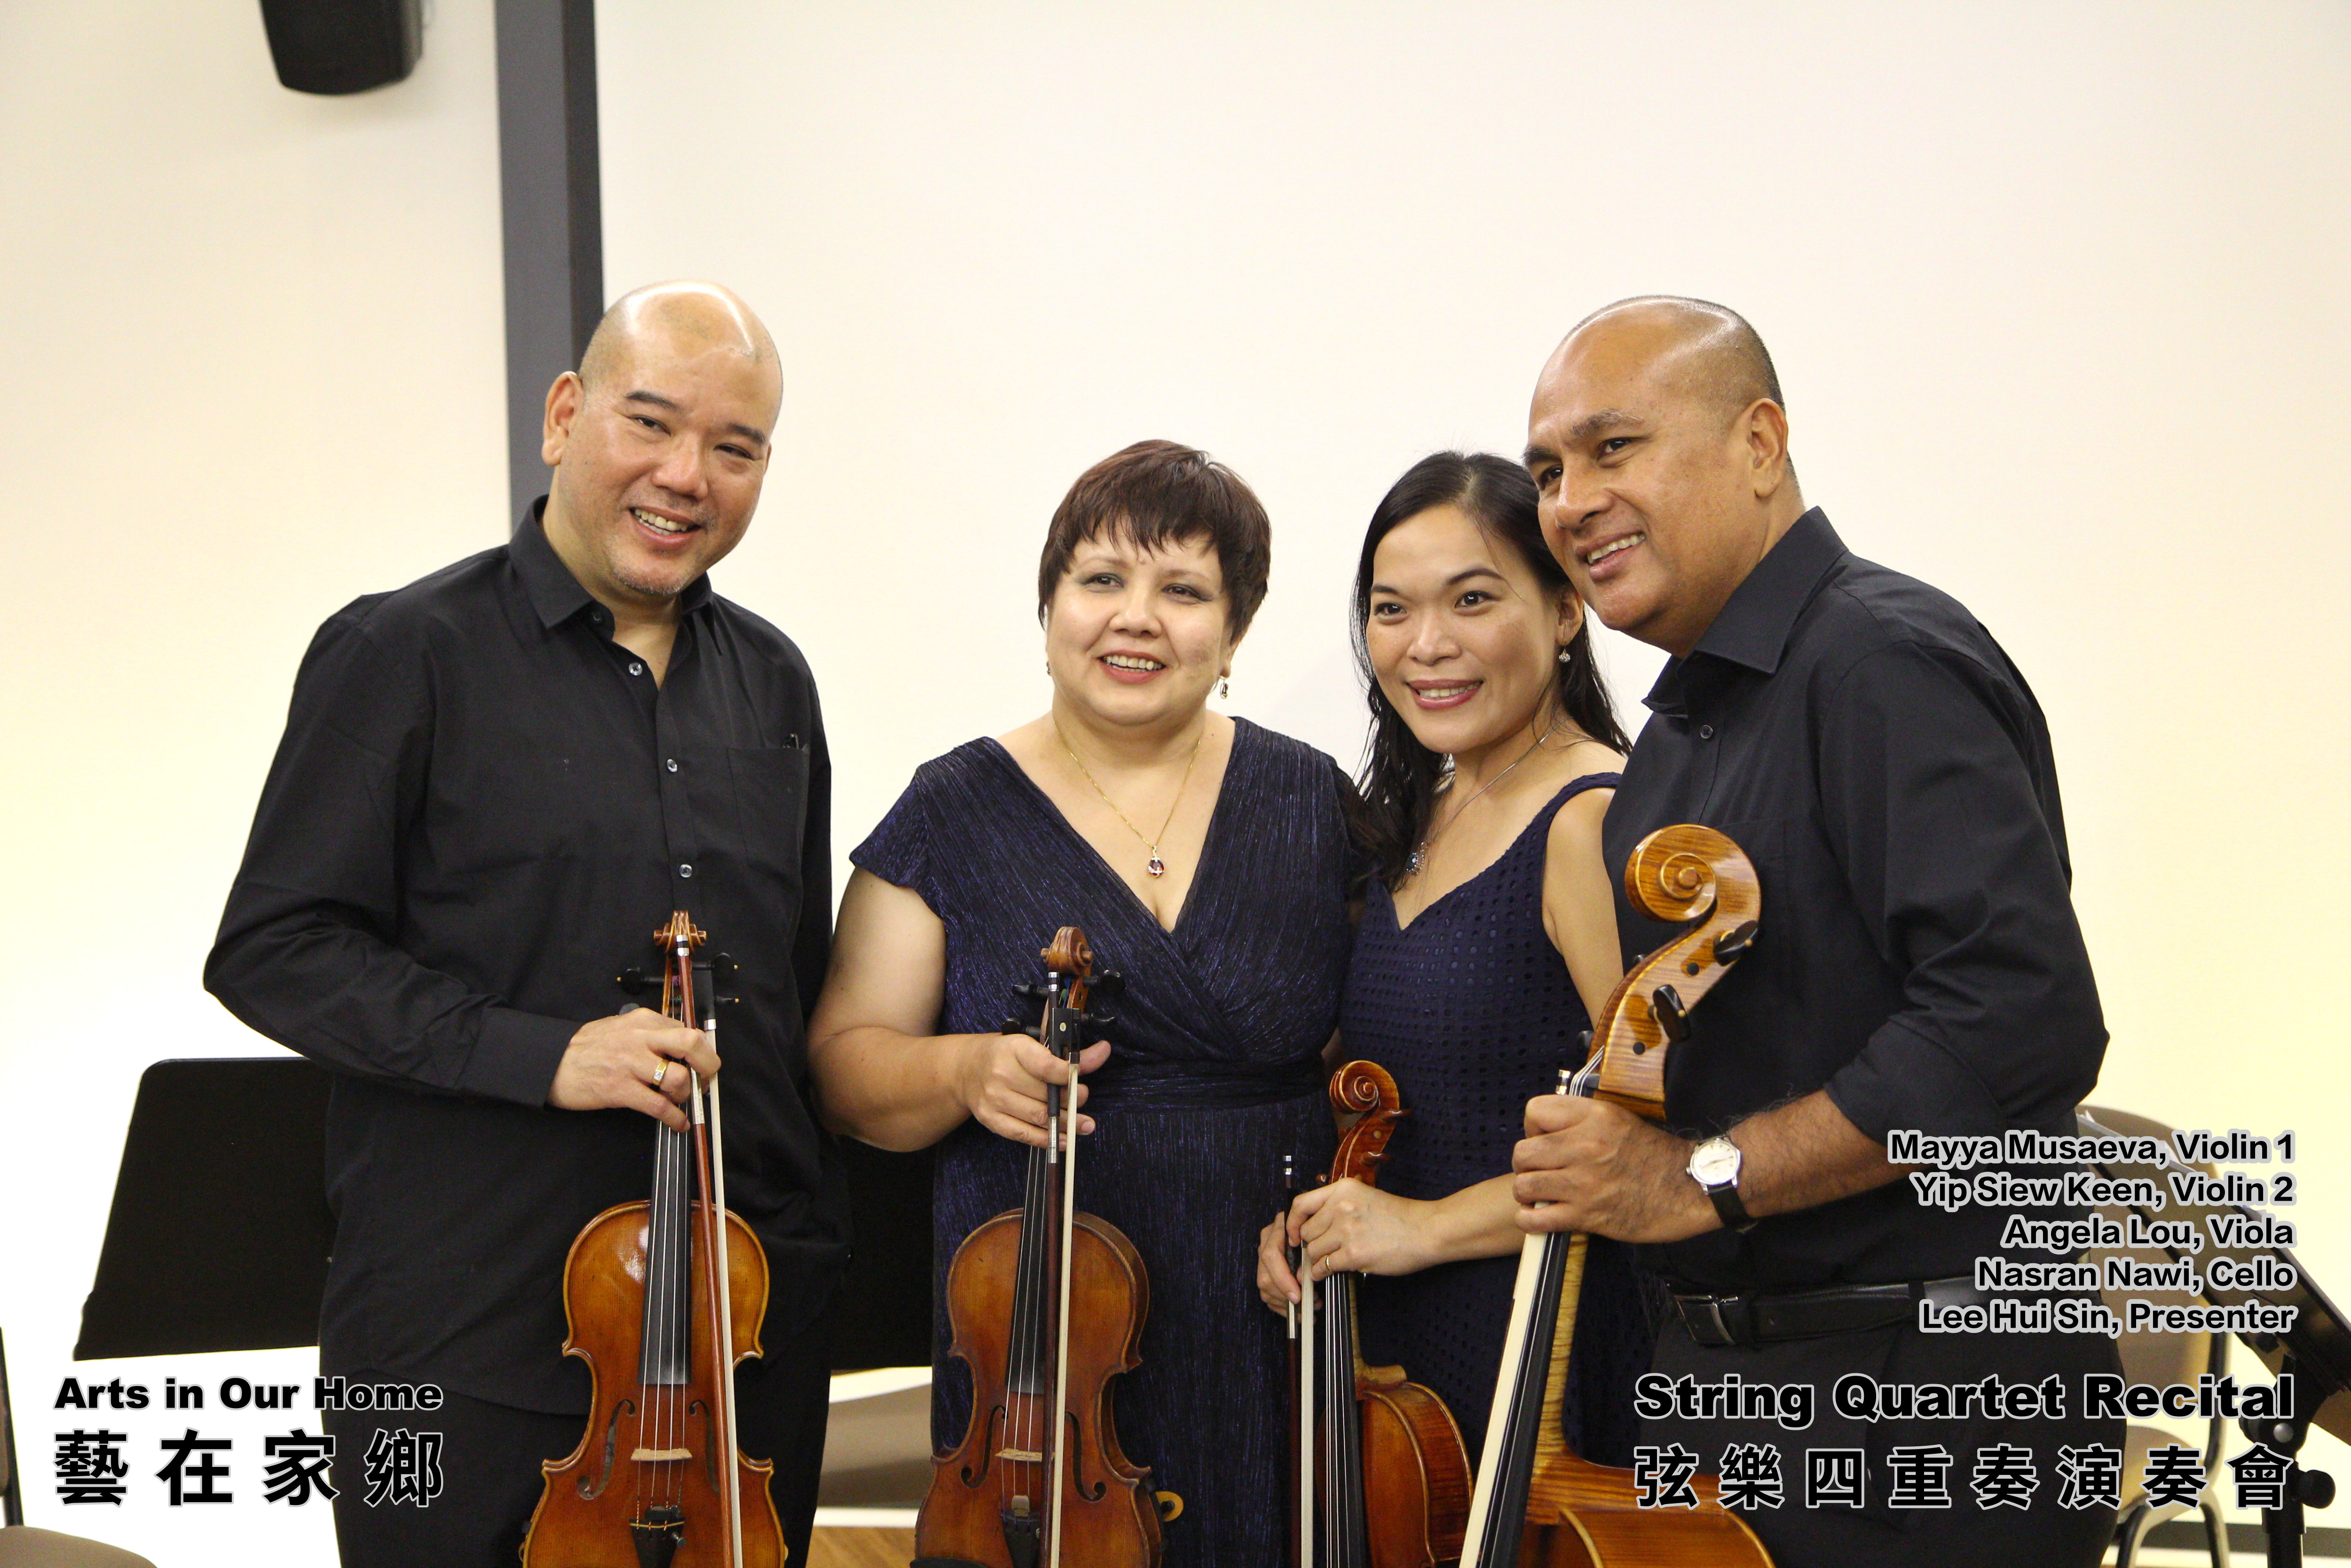 String Quartet Recital Arts in Our Home Batu Pahat Johor Malaysia 弦乐四重奏演奏会 艺在家乡 峇株巴辖 柔佛 马来西亚 A010